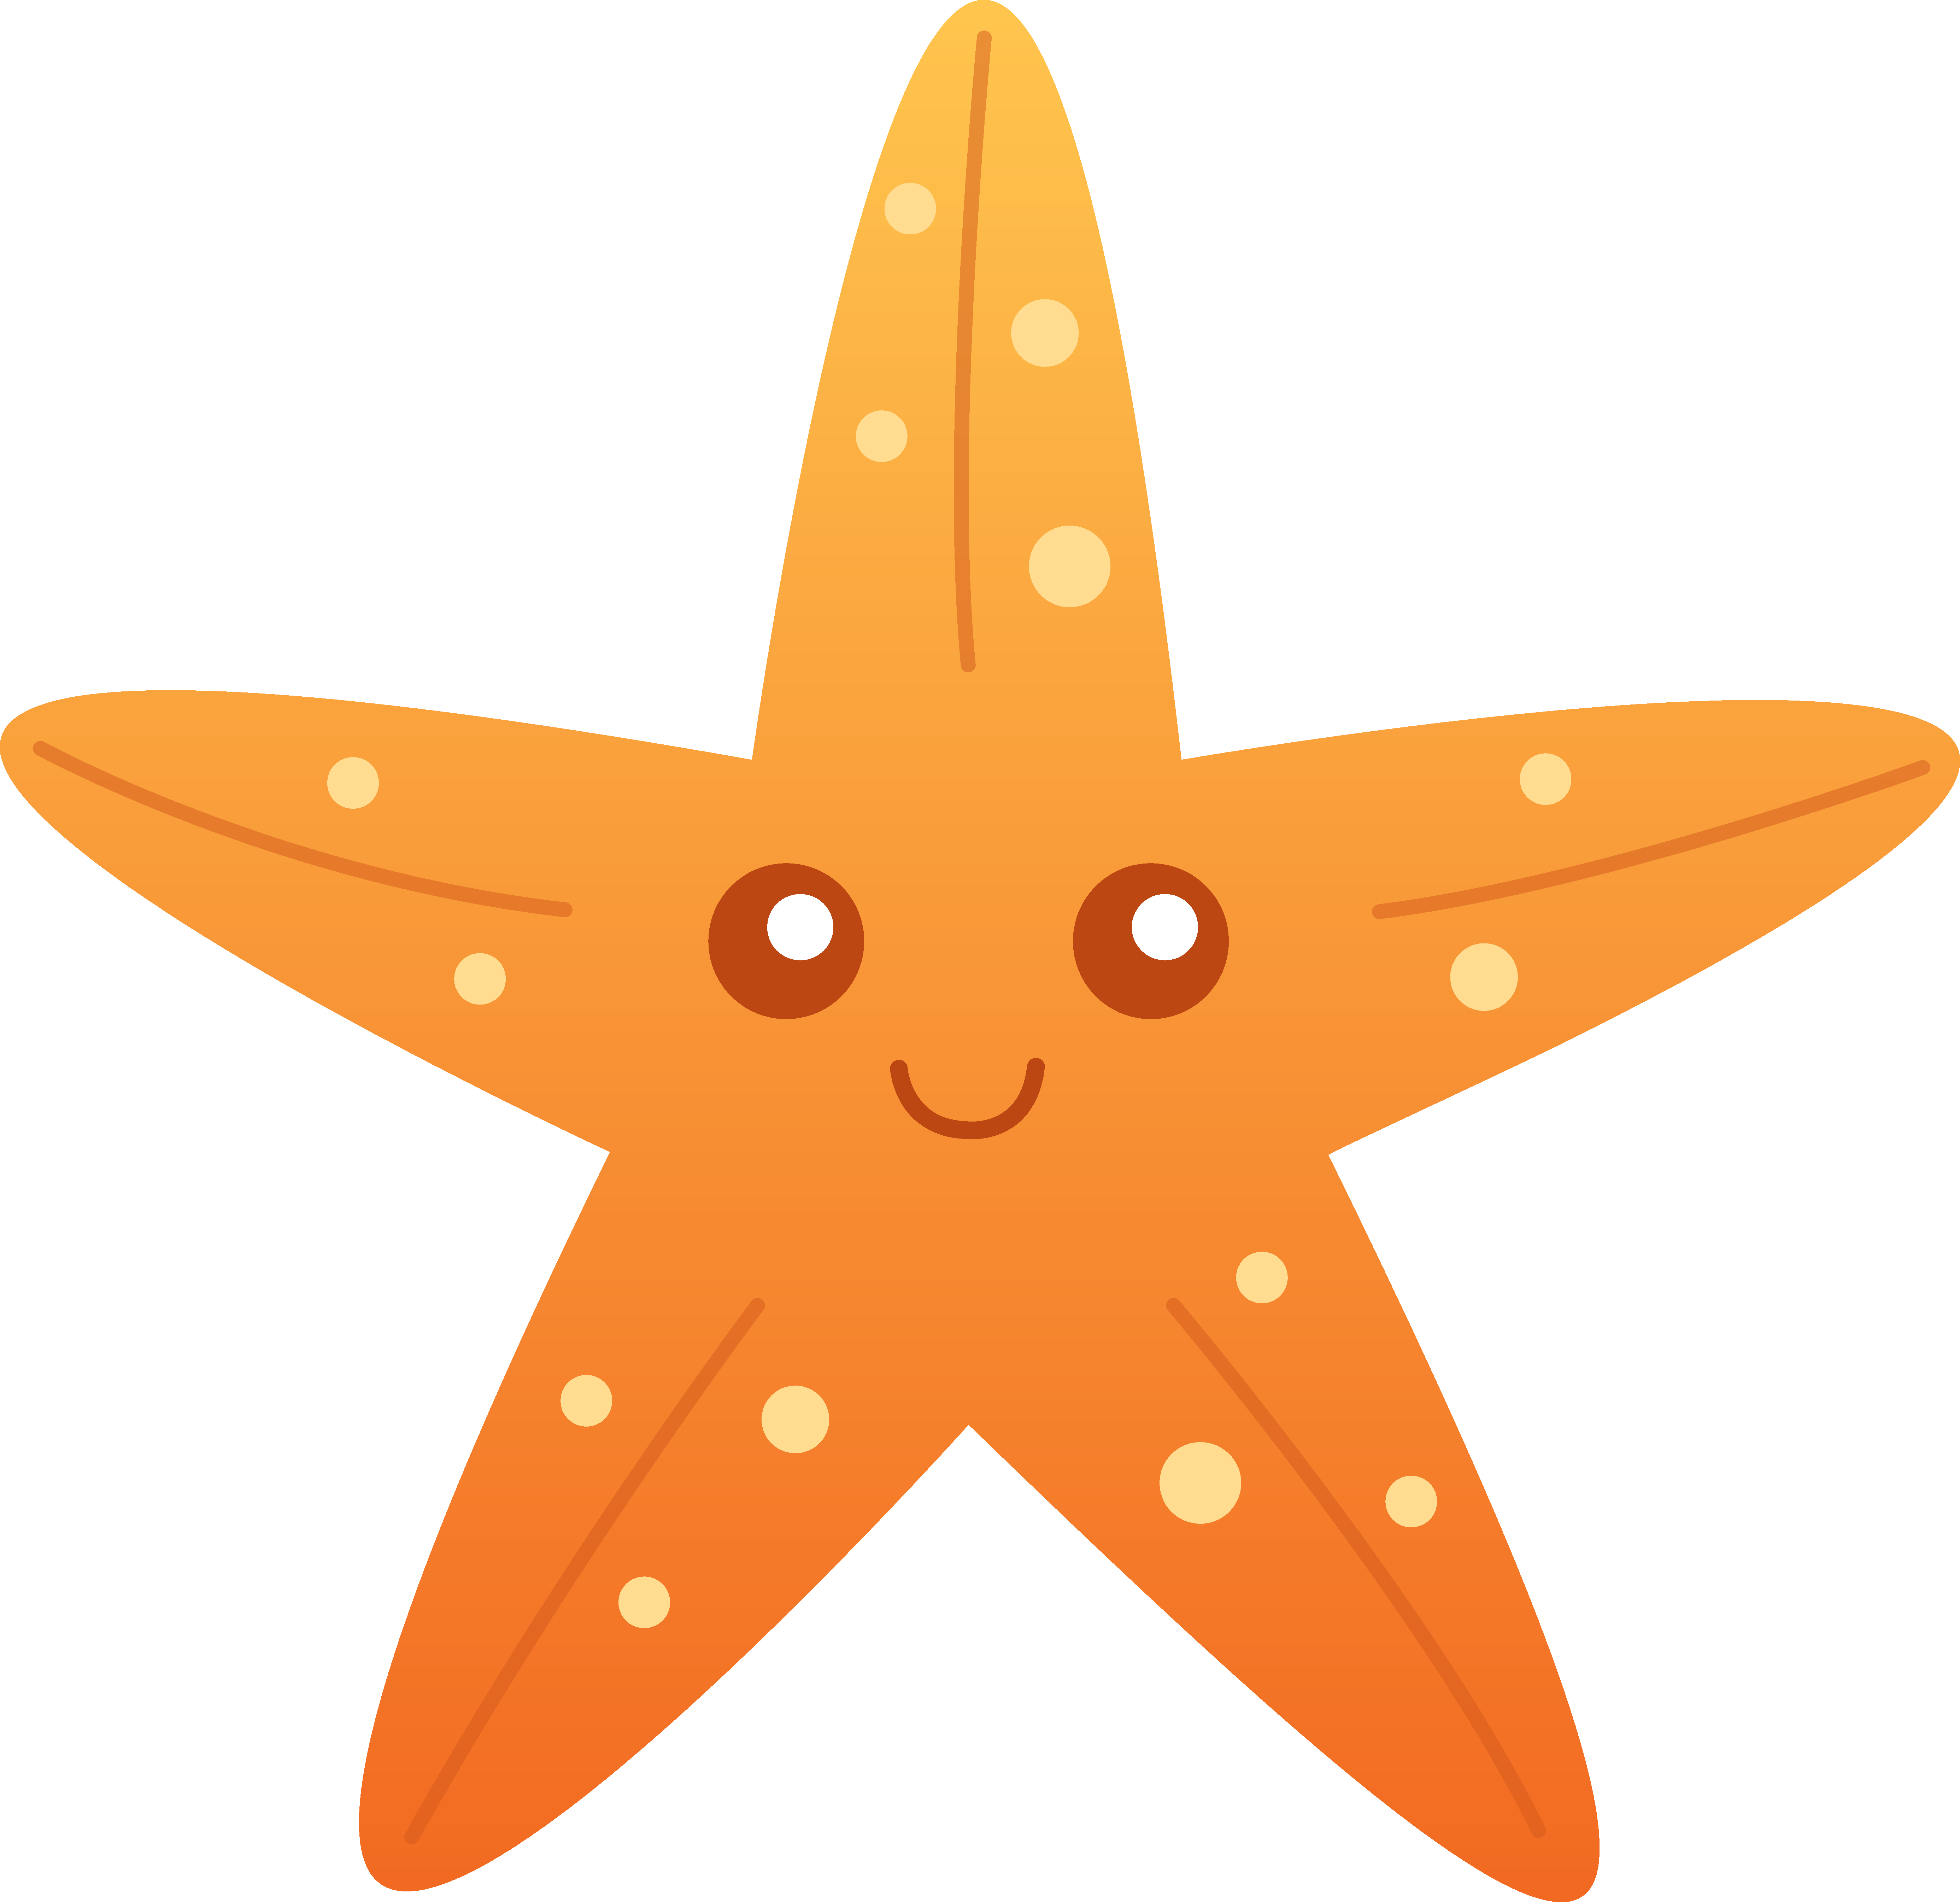 Starfish Cartoon - ClipArt Best